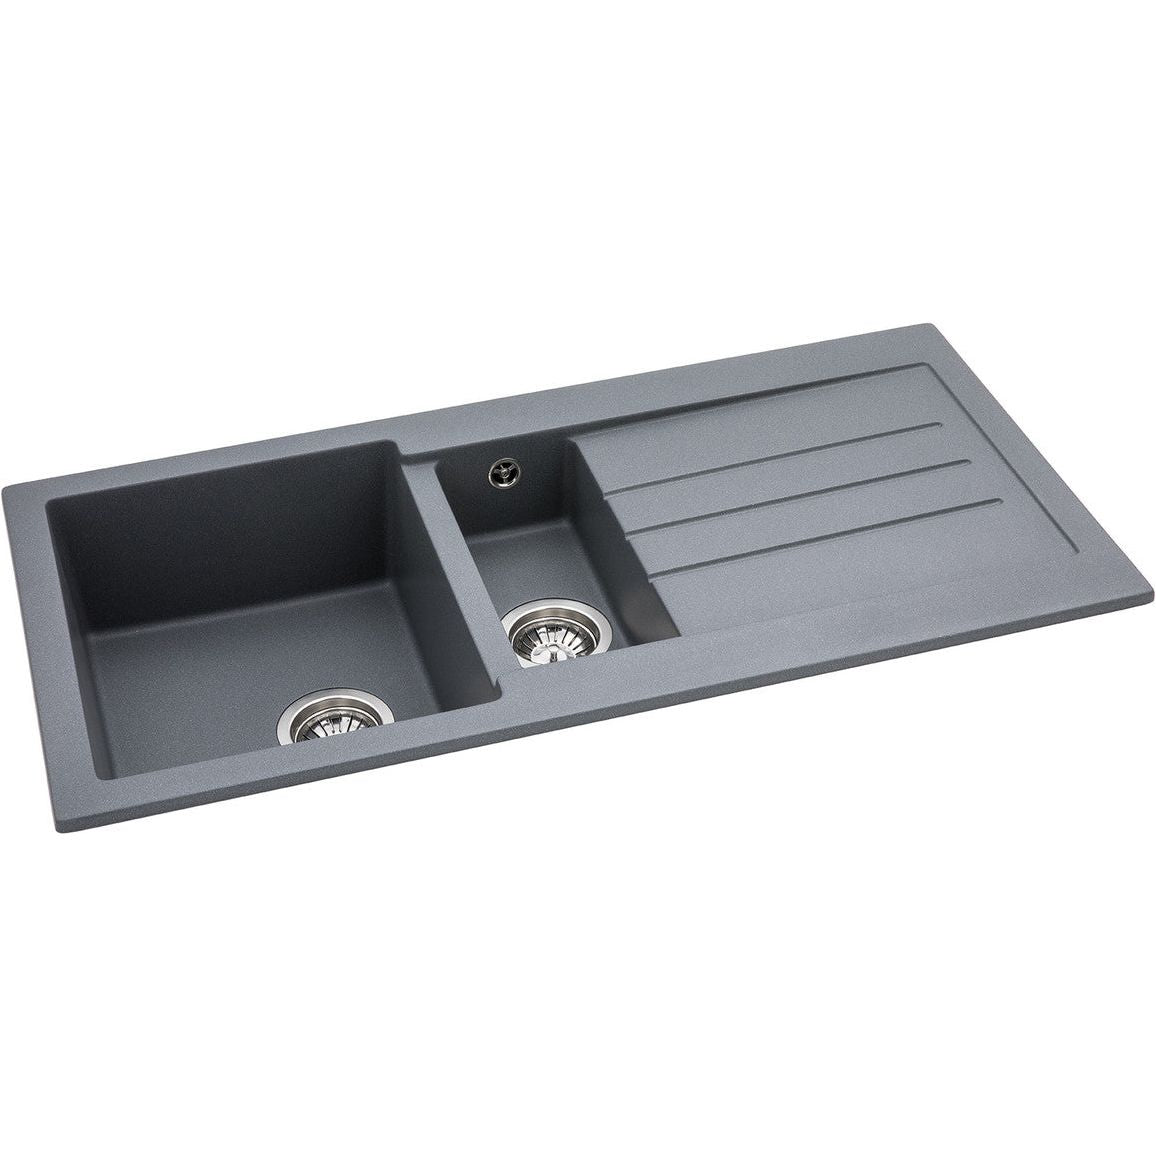 Abode Xcite 1.5B & Drainer Granite Inset Sink - Grey Metallic